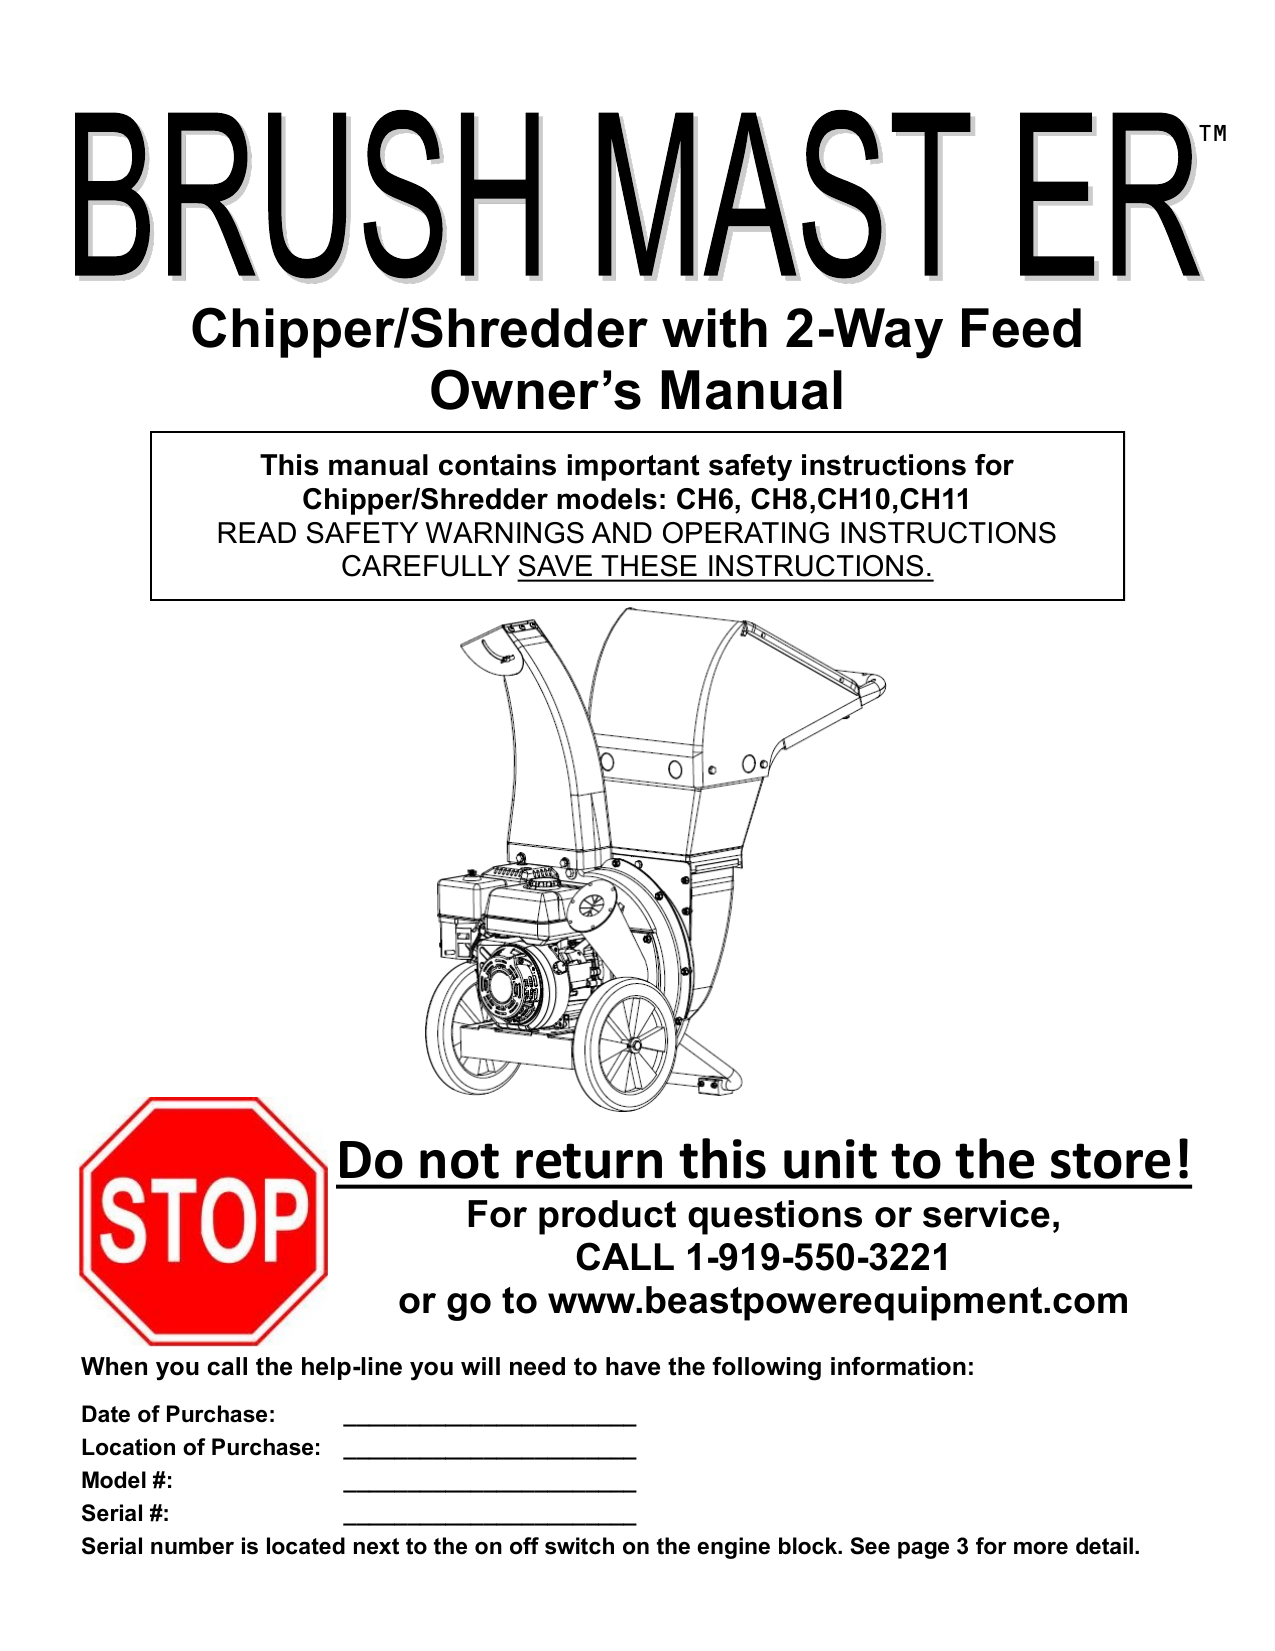 Brush Master Carburetor w/ Shutoff Gaskets for DEK CH6 Chipper Shredder 